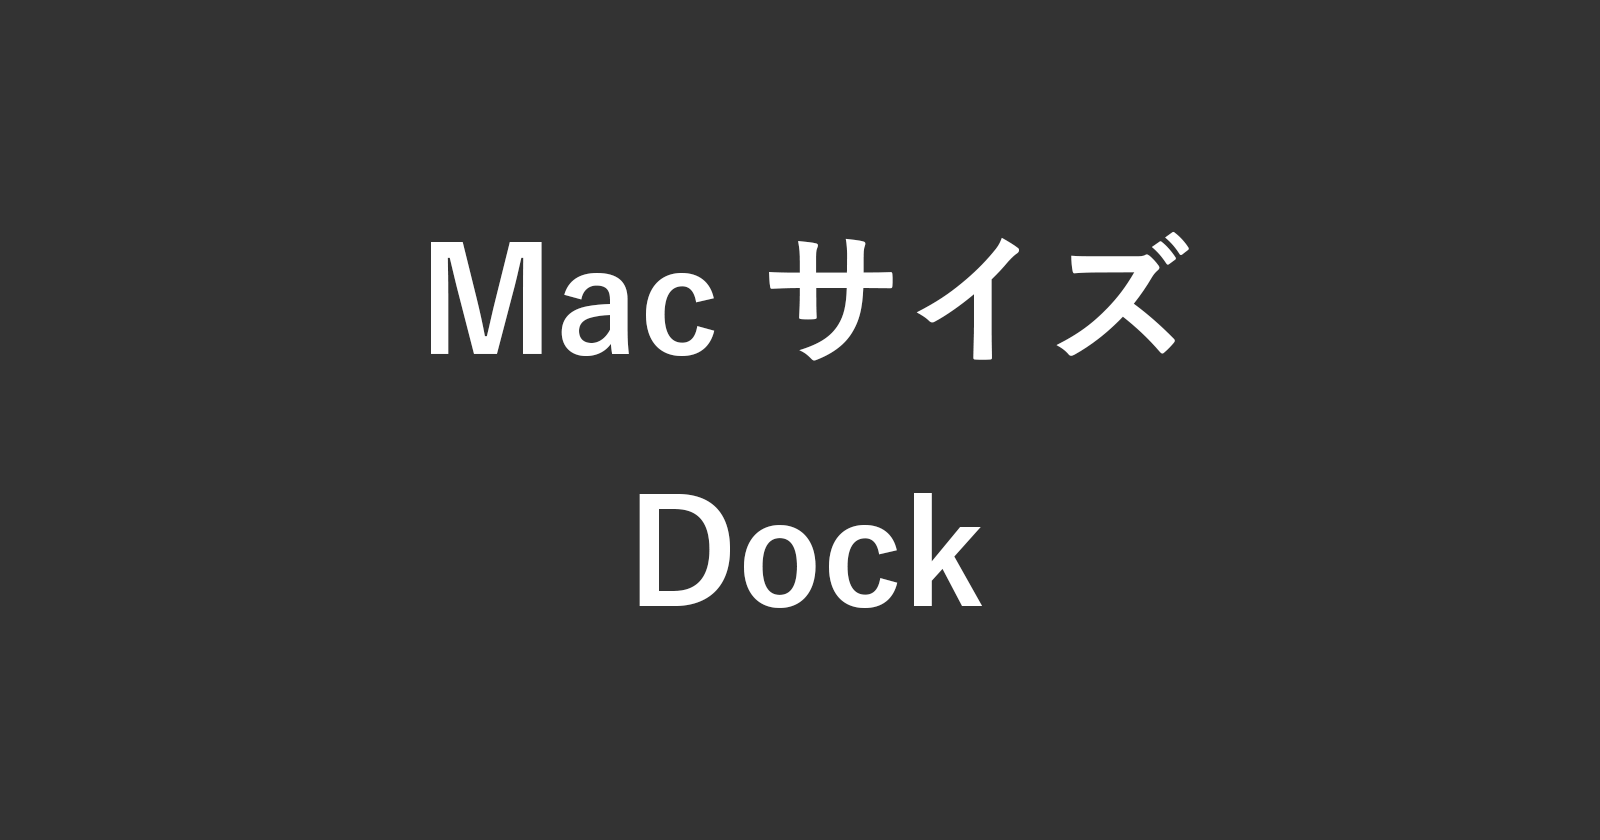 mac dock icon size